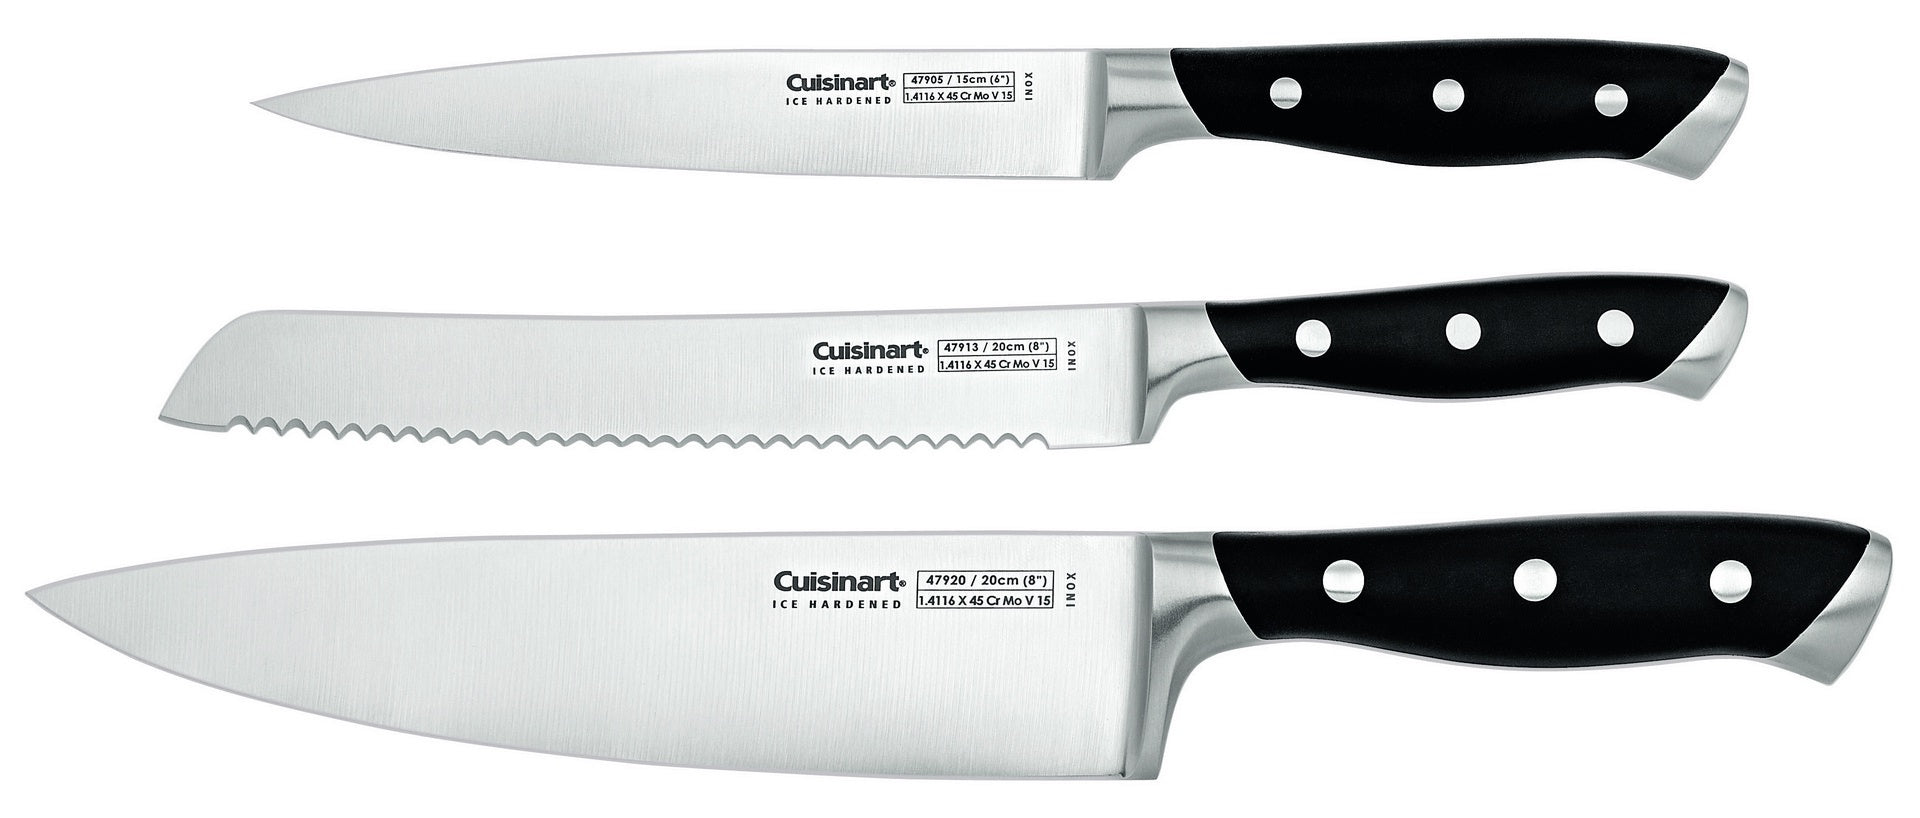 Cuisinart 3pc Kitchen Knife Set *